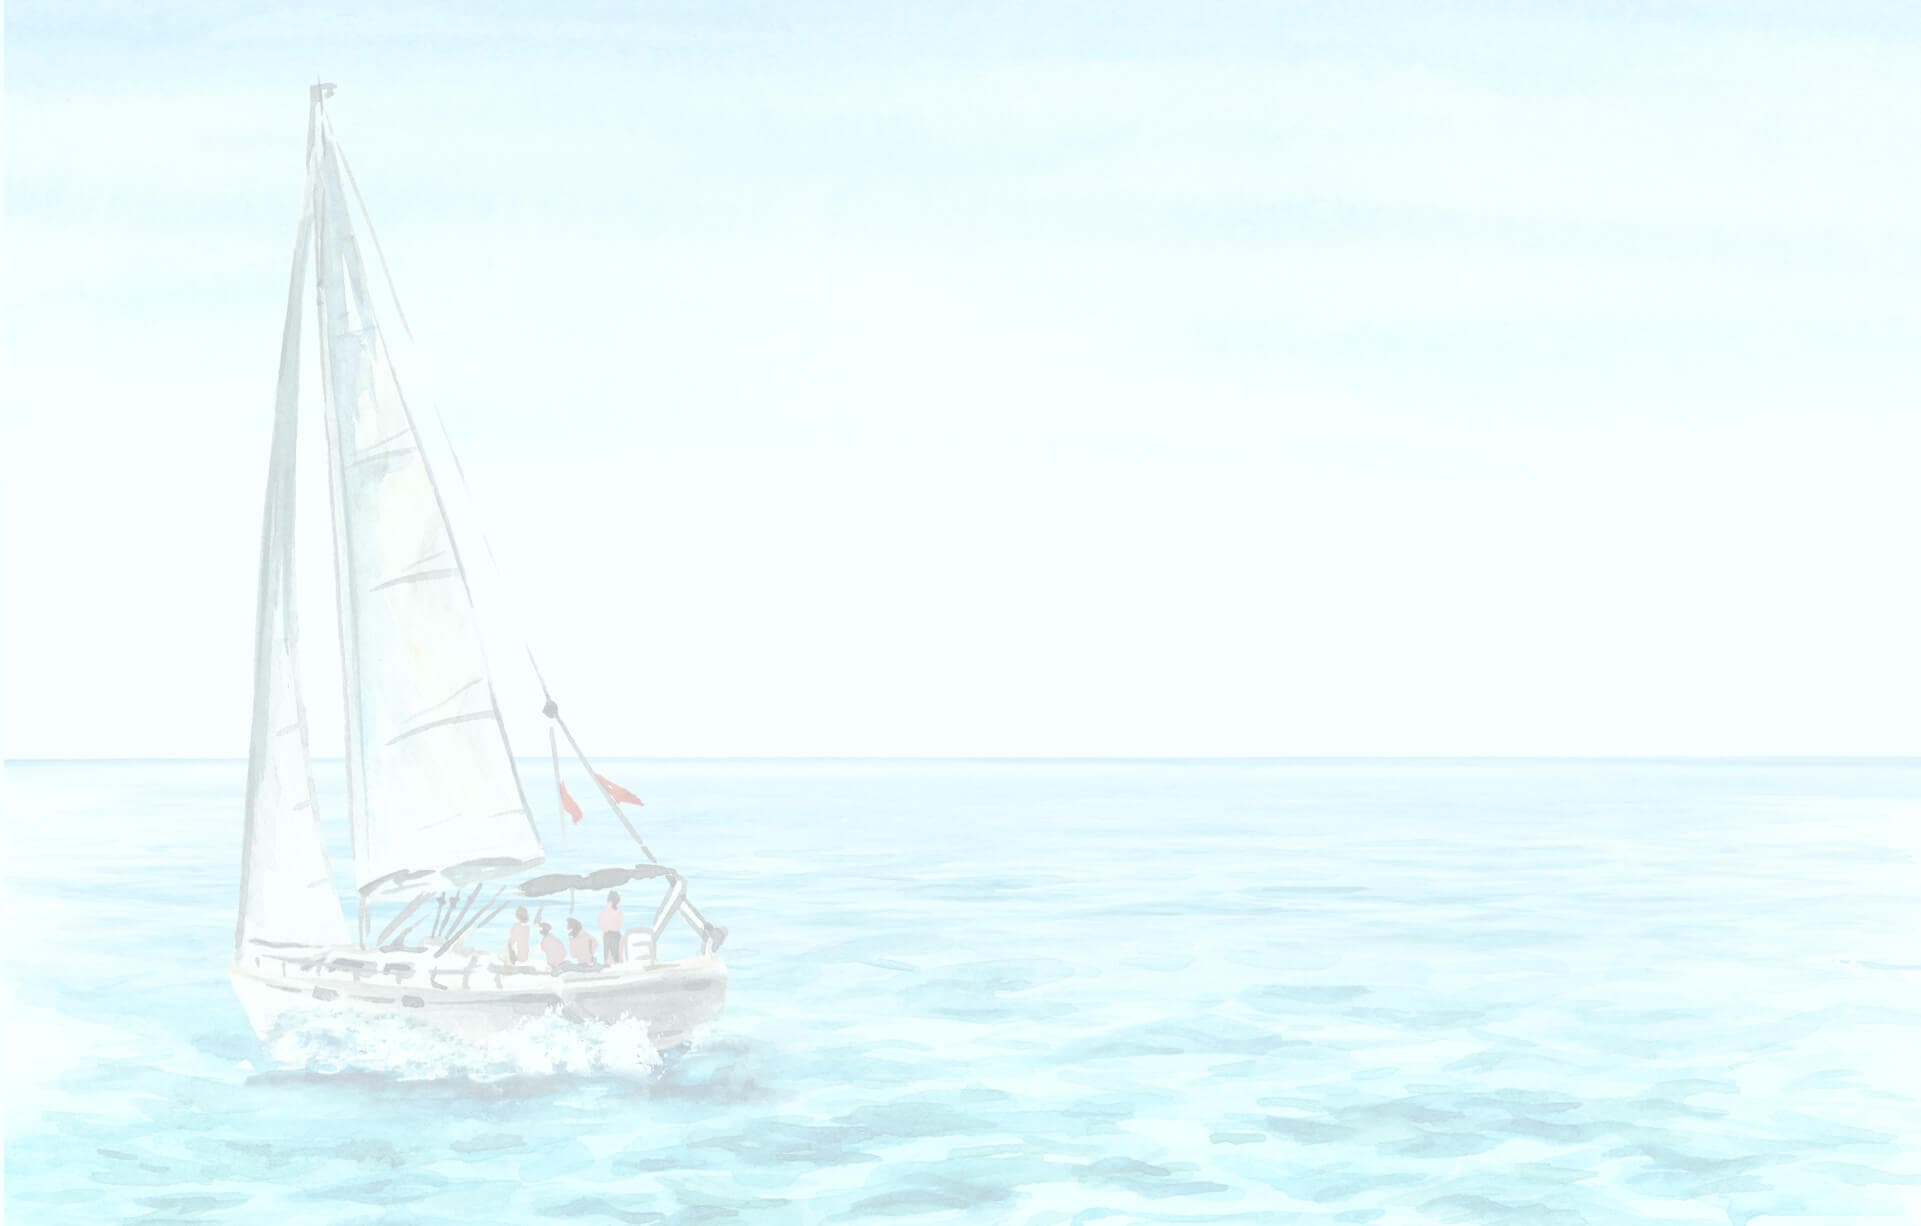 Sail background image.